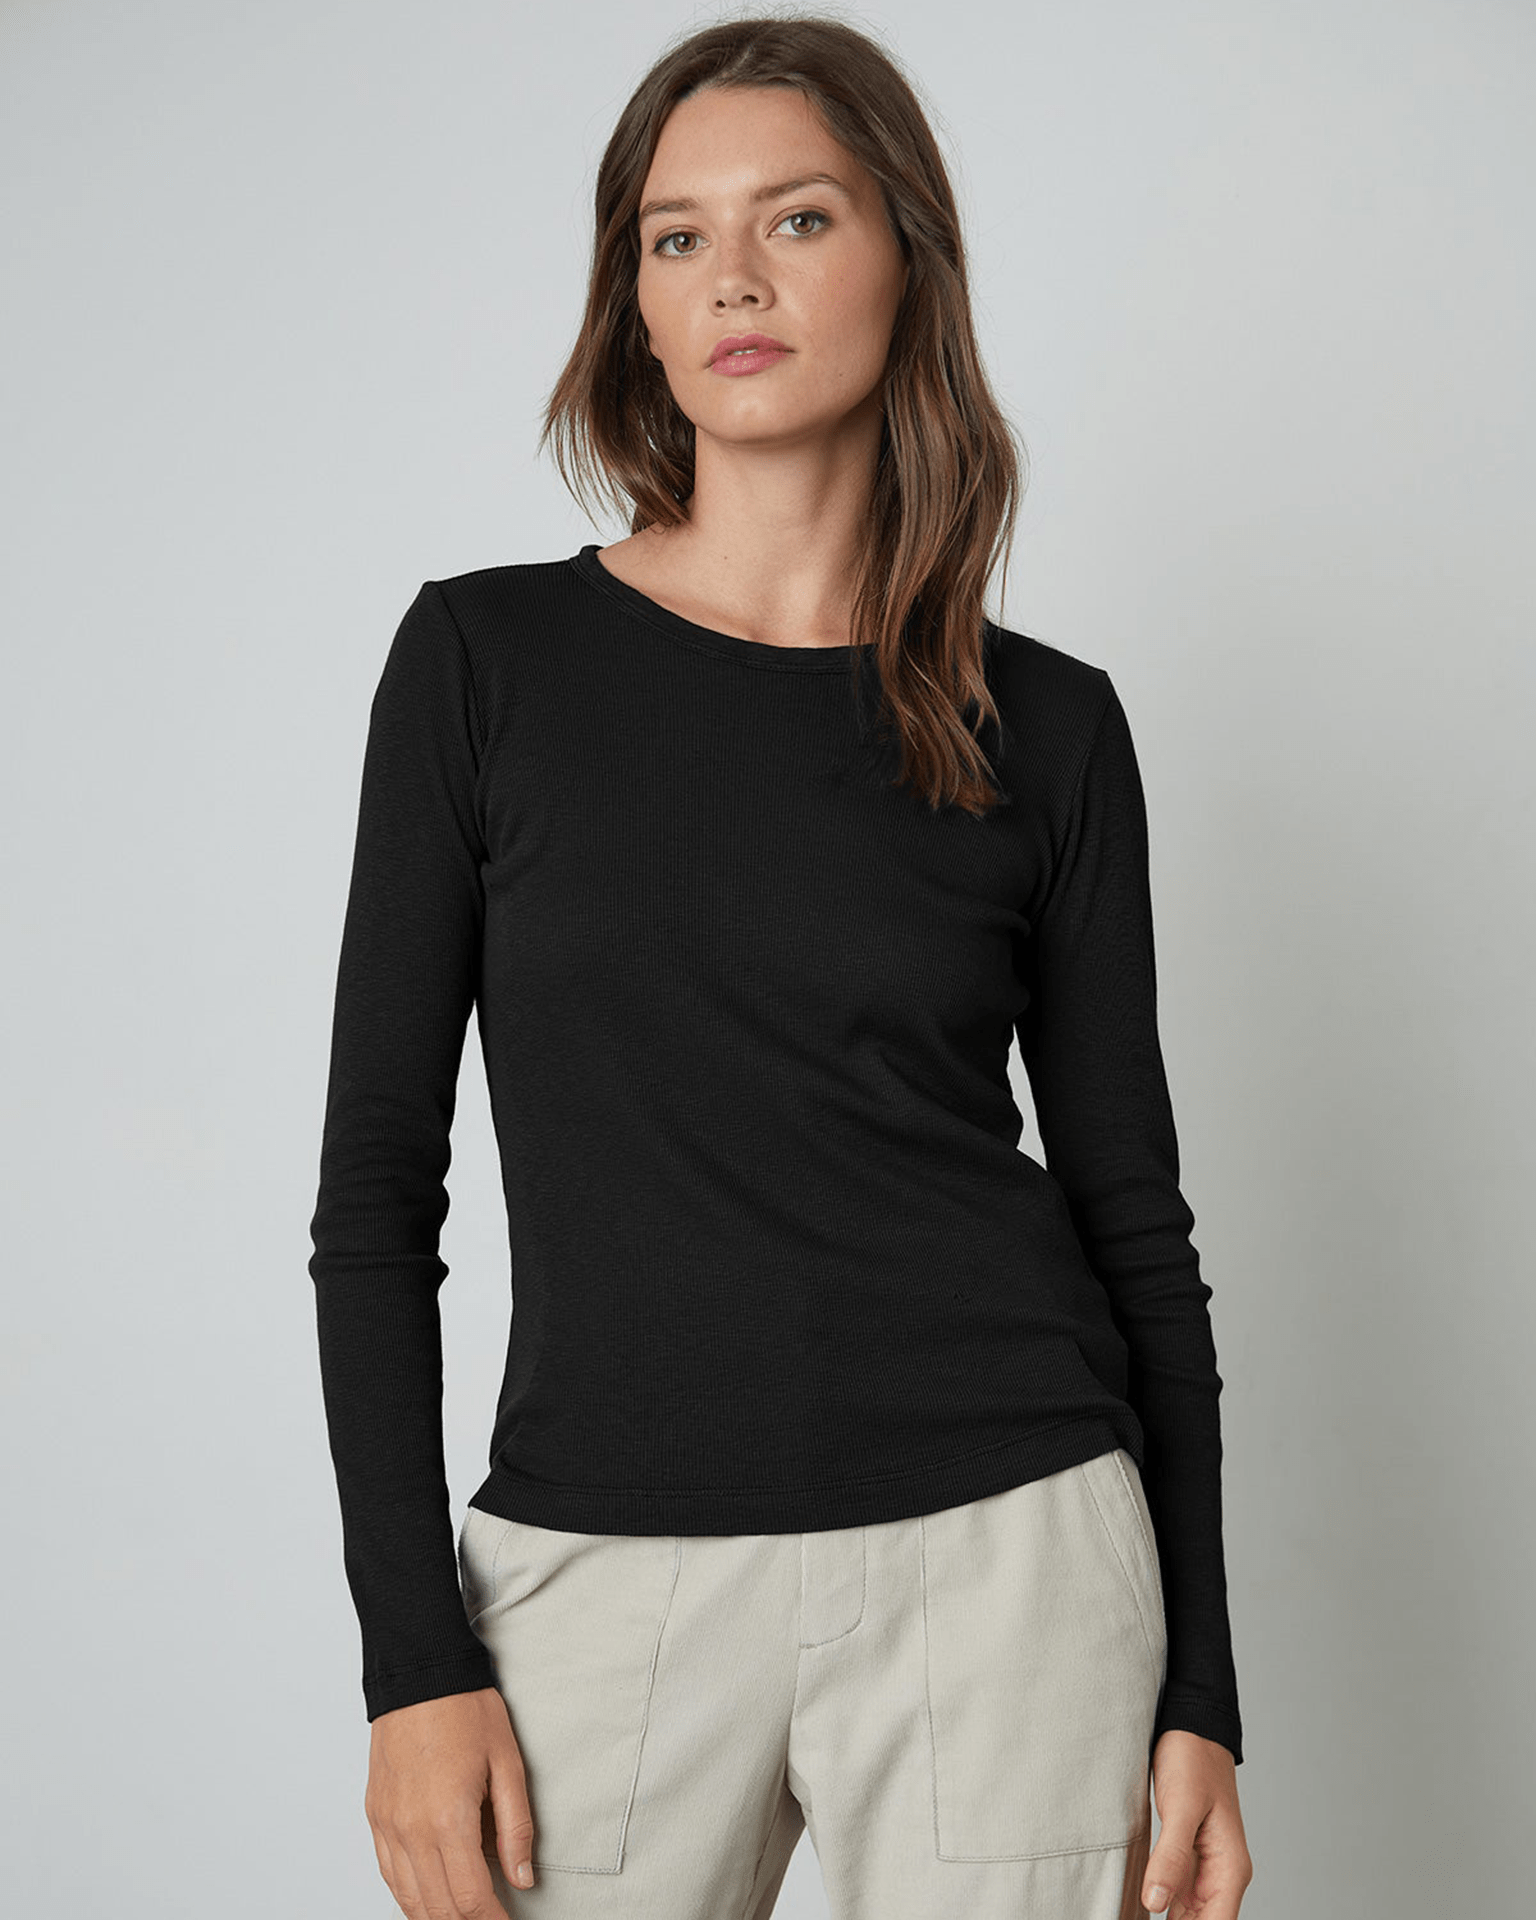 Brilliant Basics Women's Long Sleeve Shirt - Black